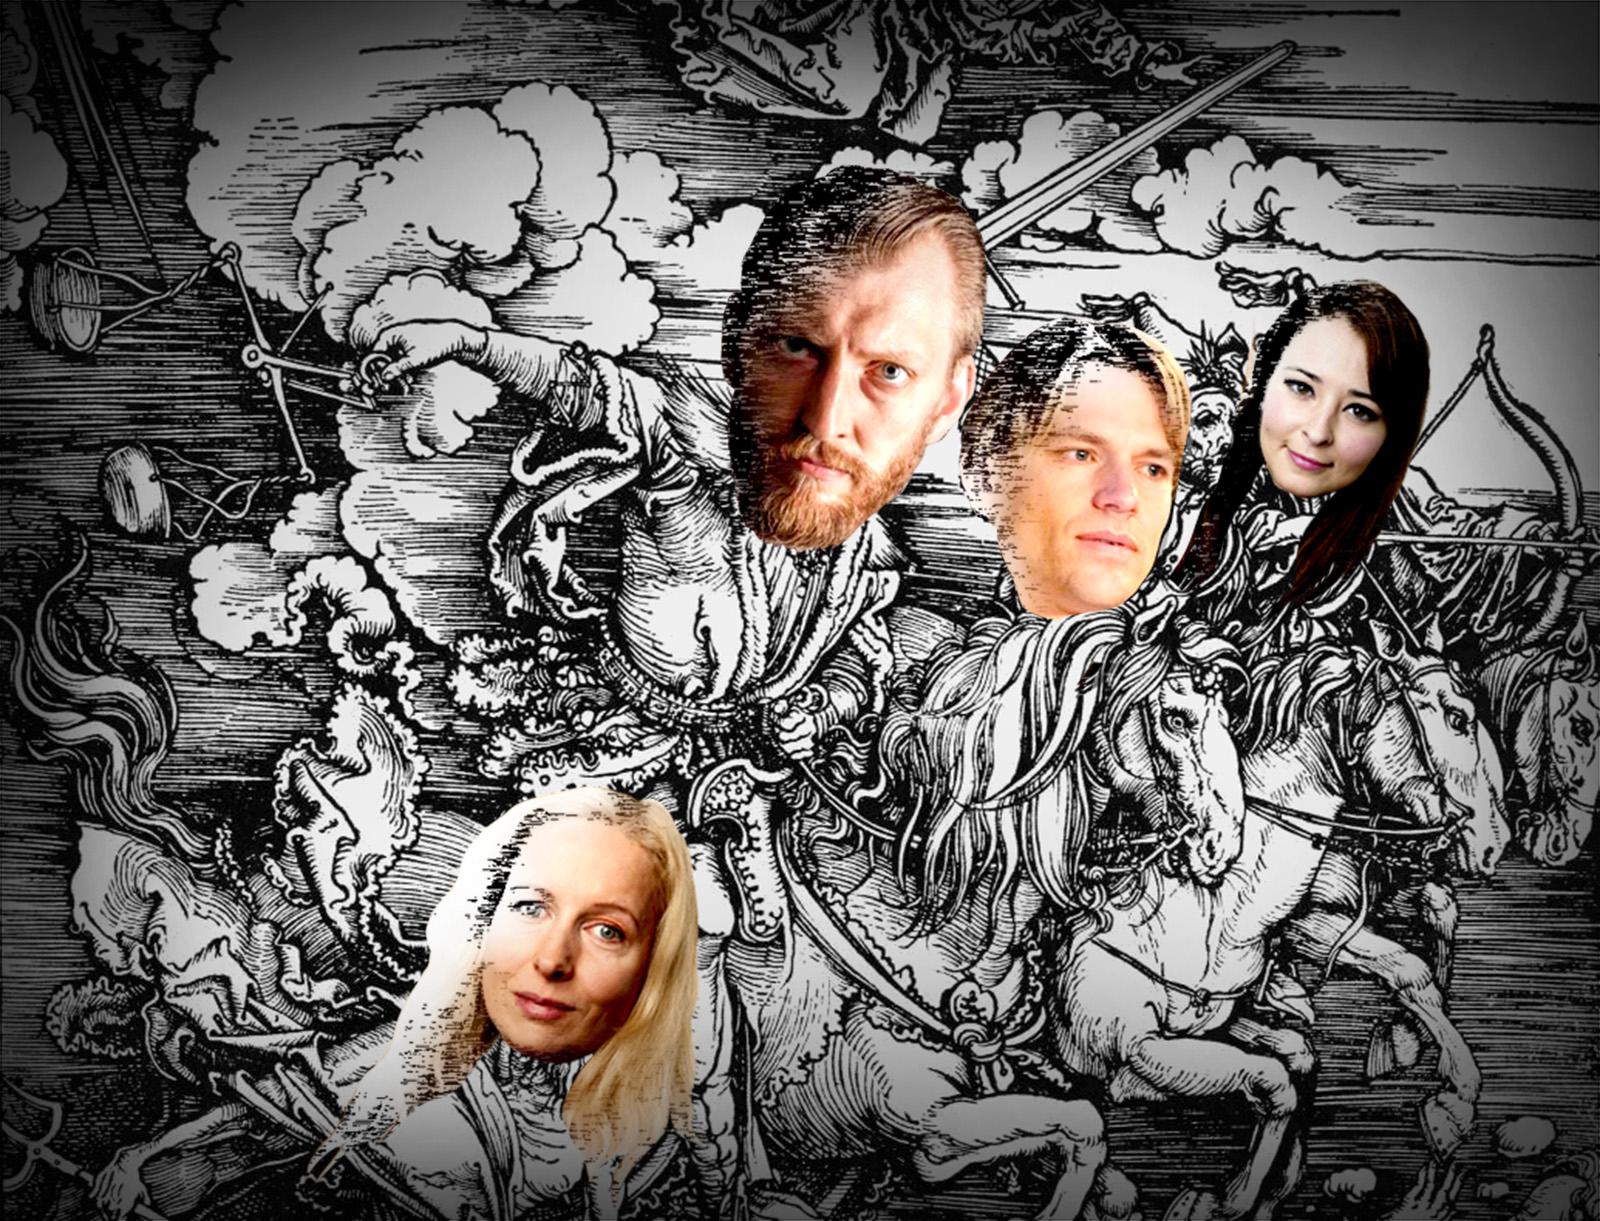 Apokalypsens fyra liberala ryttare i Aftonbladet ledarsidas julkrönika 2015 – Anna Dahlberg, PM Nilsson, Alice Teodorescu Måwe och Ivar Arpi.